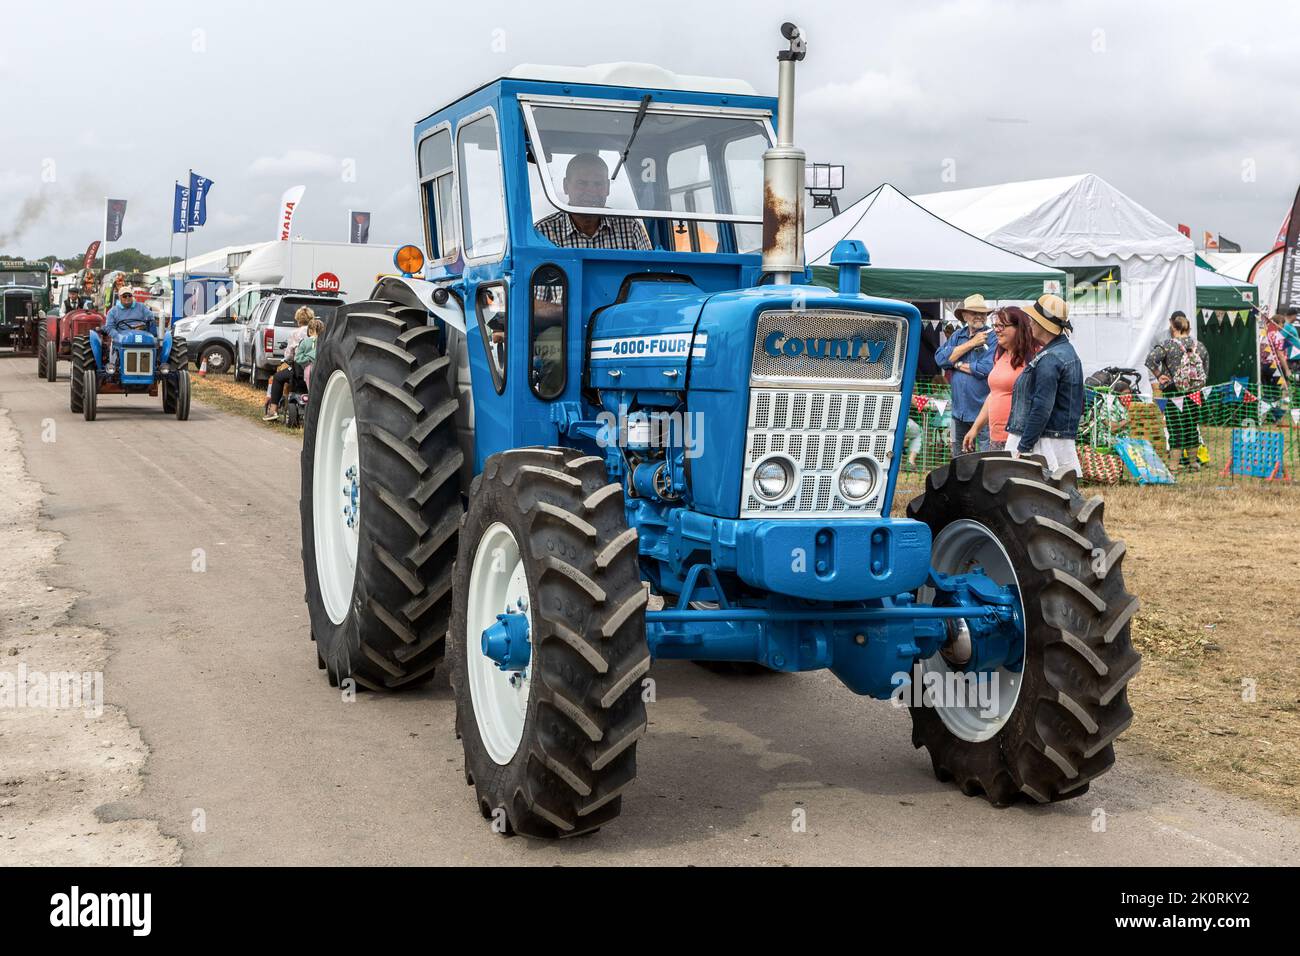 County 4000-Four Tractor, 1968 - 1975, Farm Machinery parade, Dorset County Show 2022, Dorset, UK Stock Photo